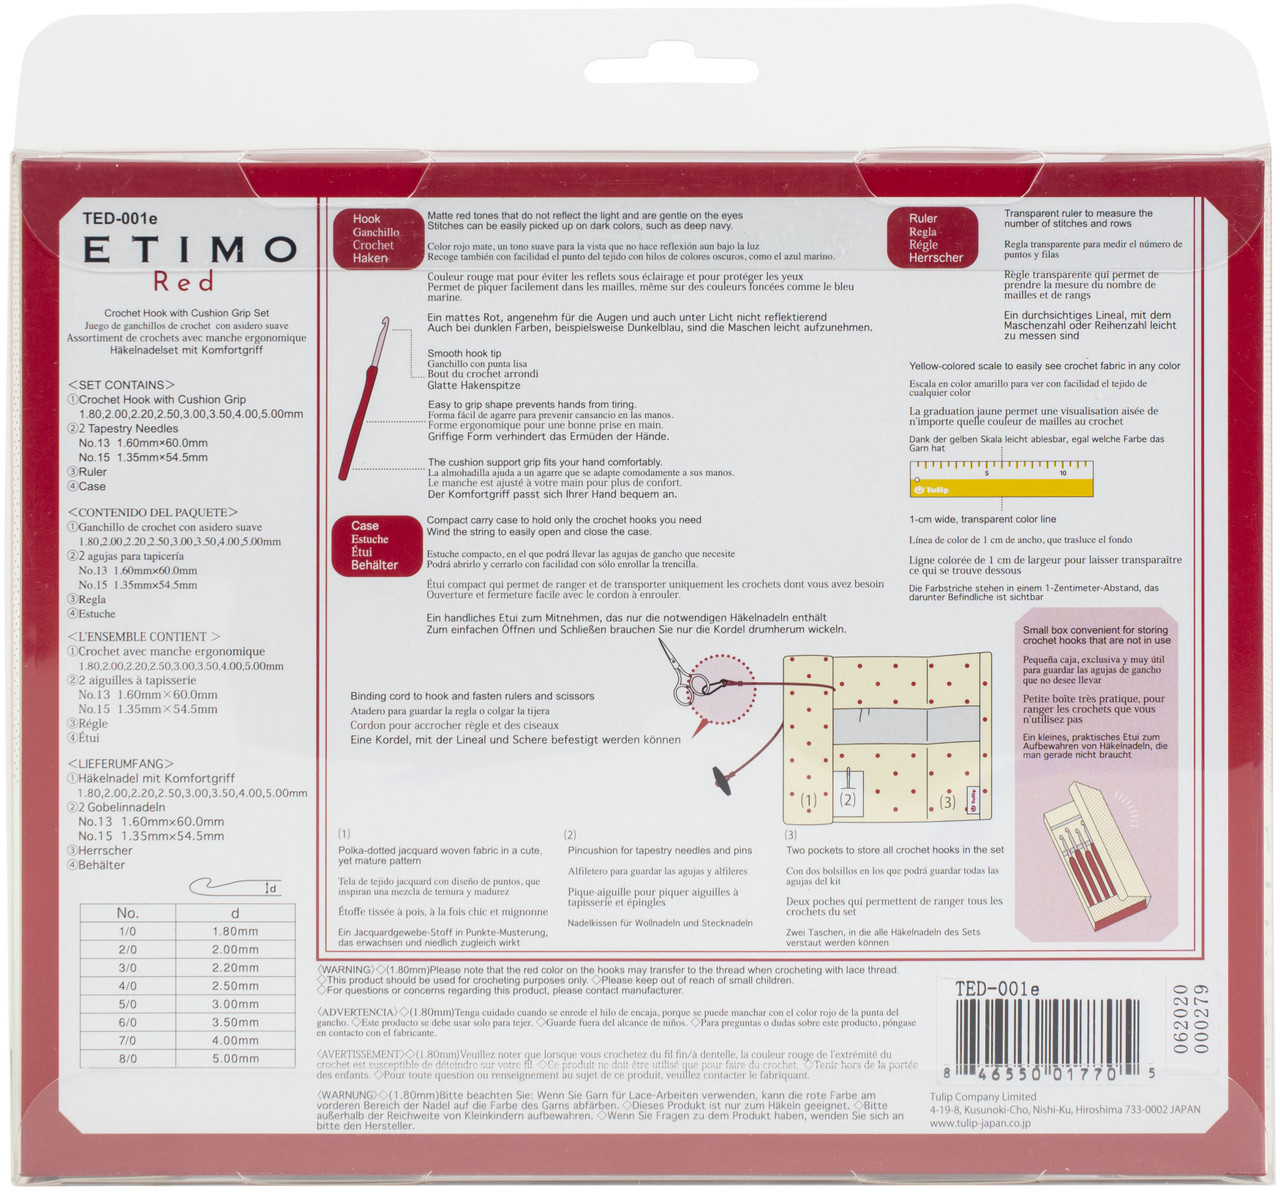 Tulip ETIMO Rose Cushion Grip Crochet Set Ter-001e Pink Large Hooks 